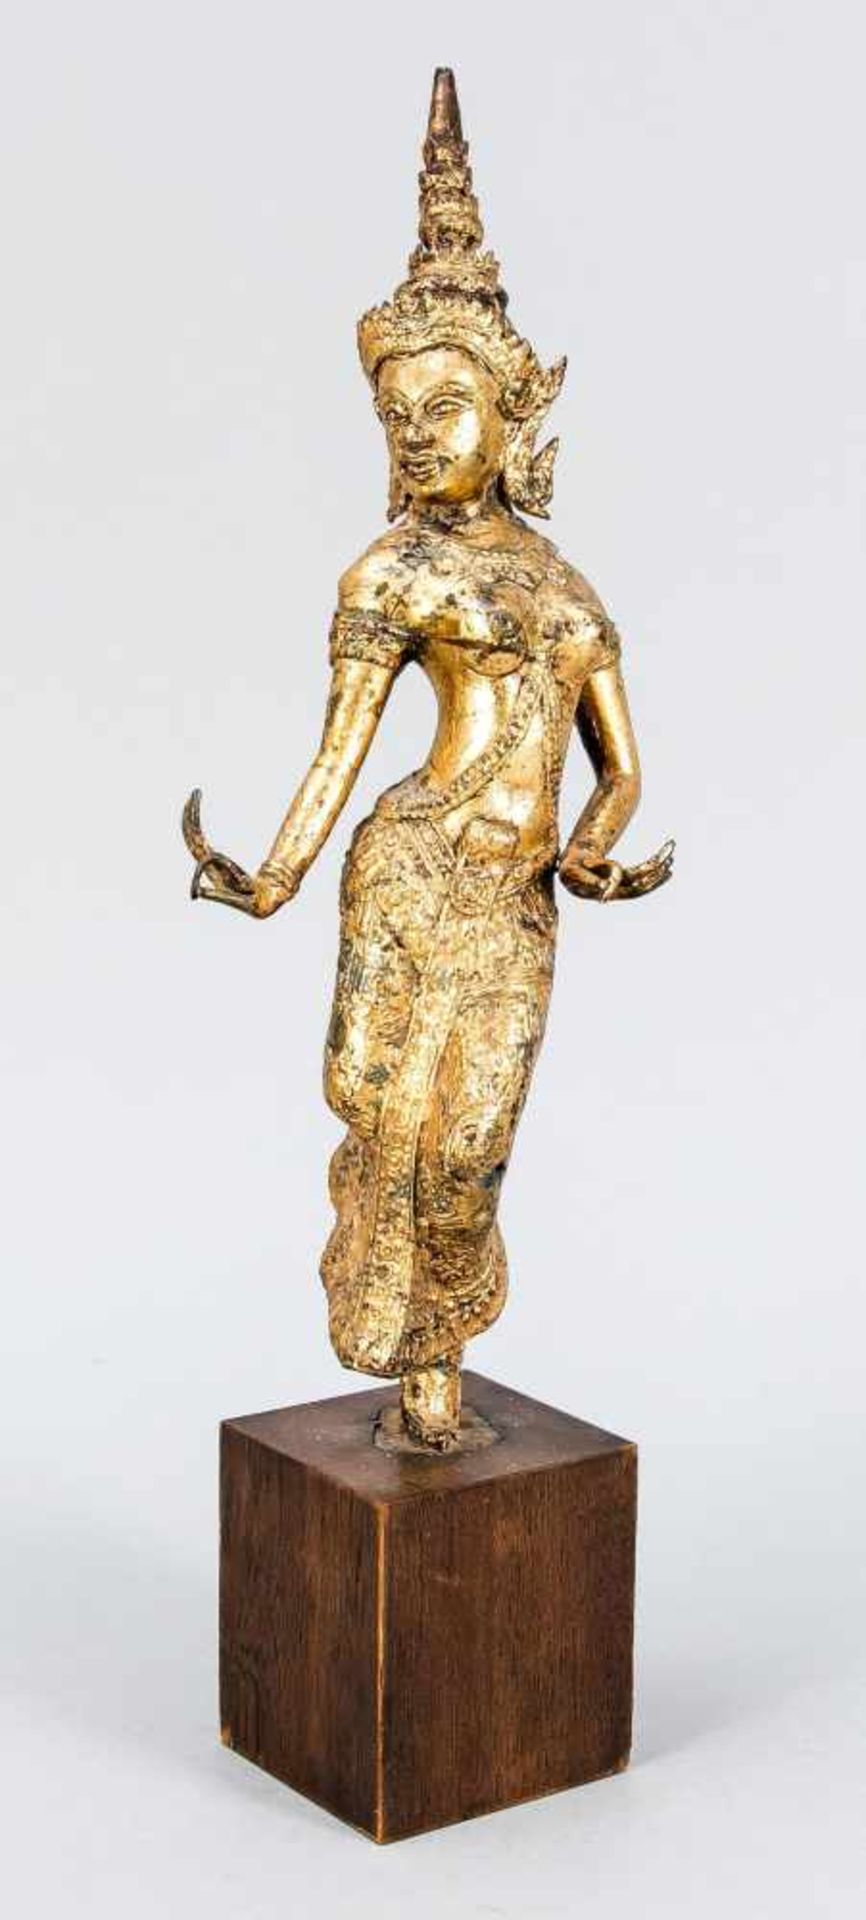 Temple dancer, Thailand / Ratanakosin, 19th century, gilt bronze. Very dynamic